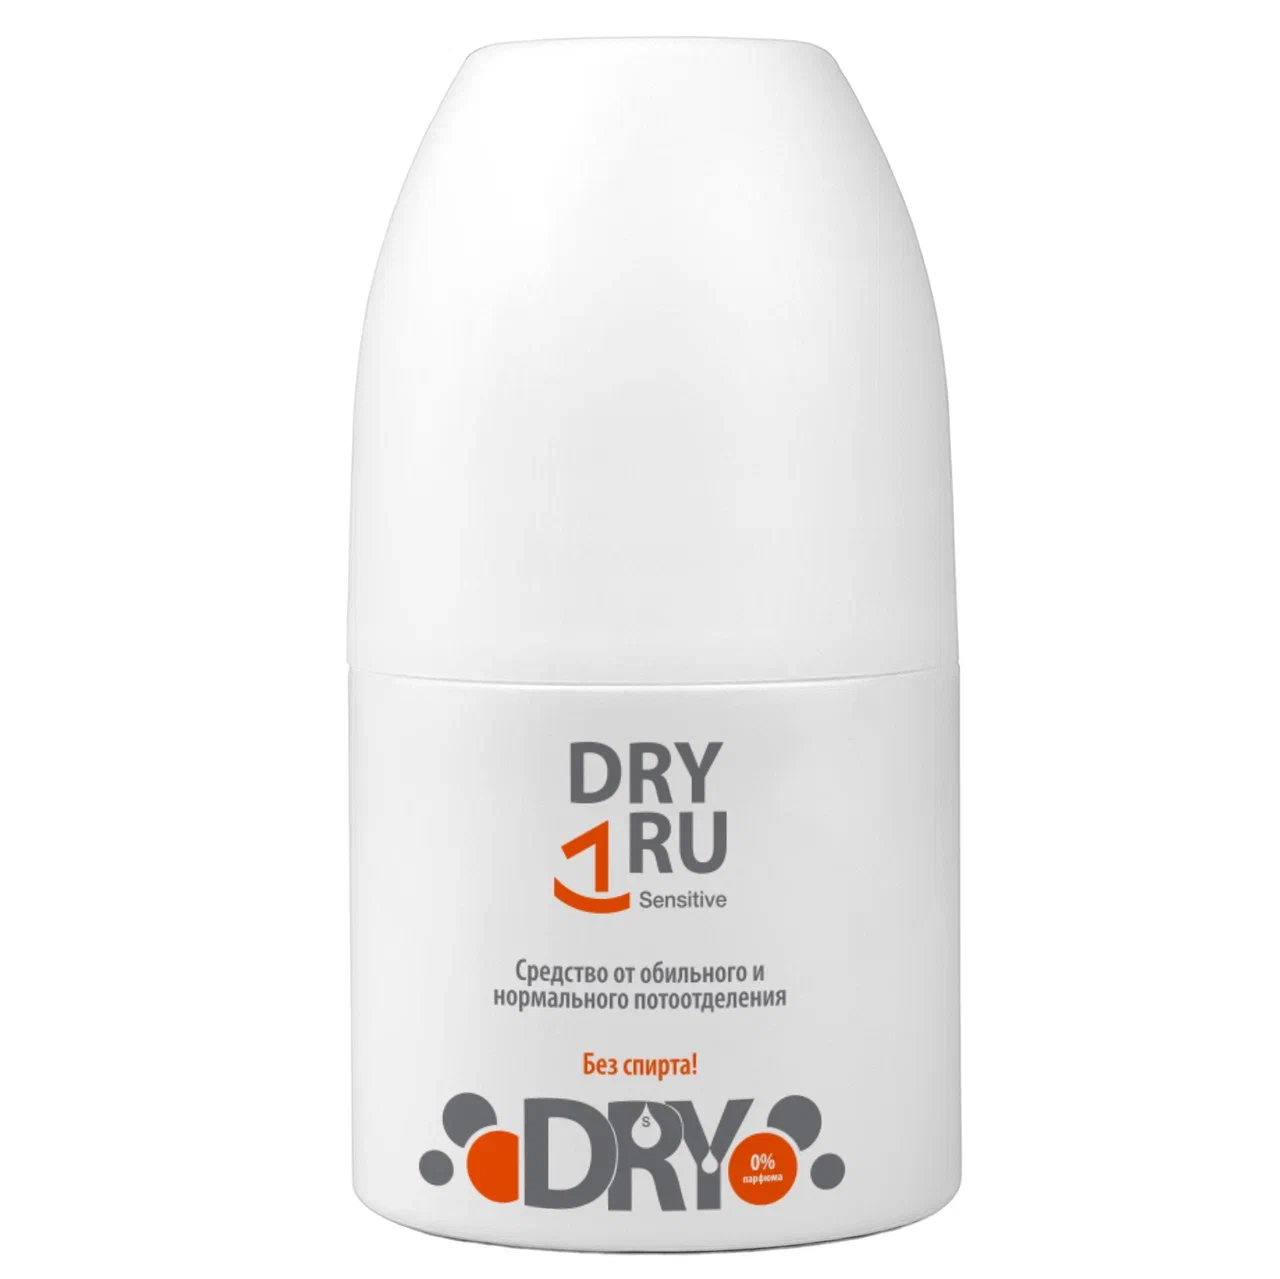 Дезодорант-антиперспирант DRY RU Sensitive шариковый, от пота и запаха 50 мл средство против потоотделения для тела sensitive 50мл